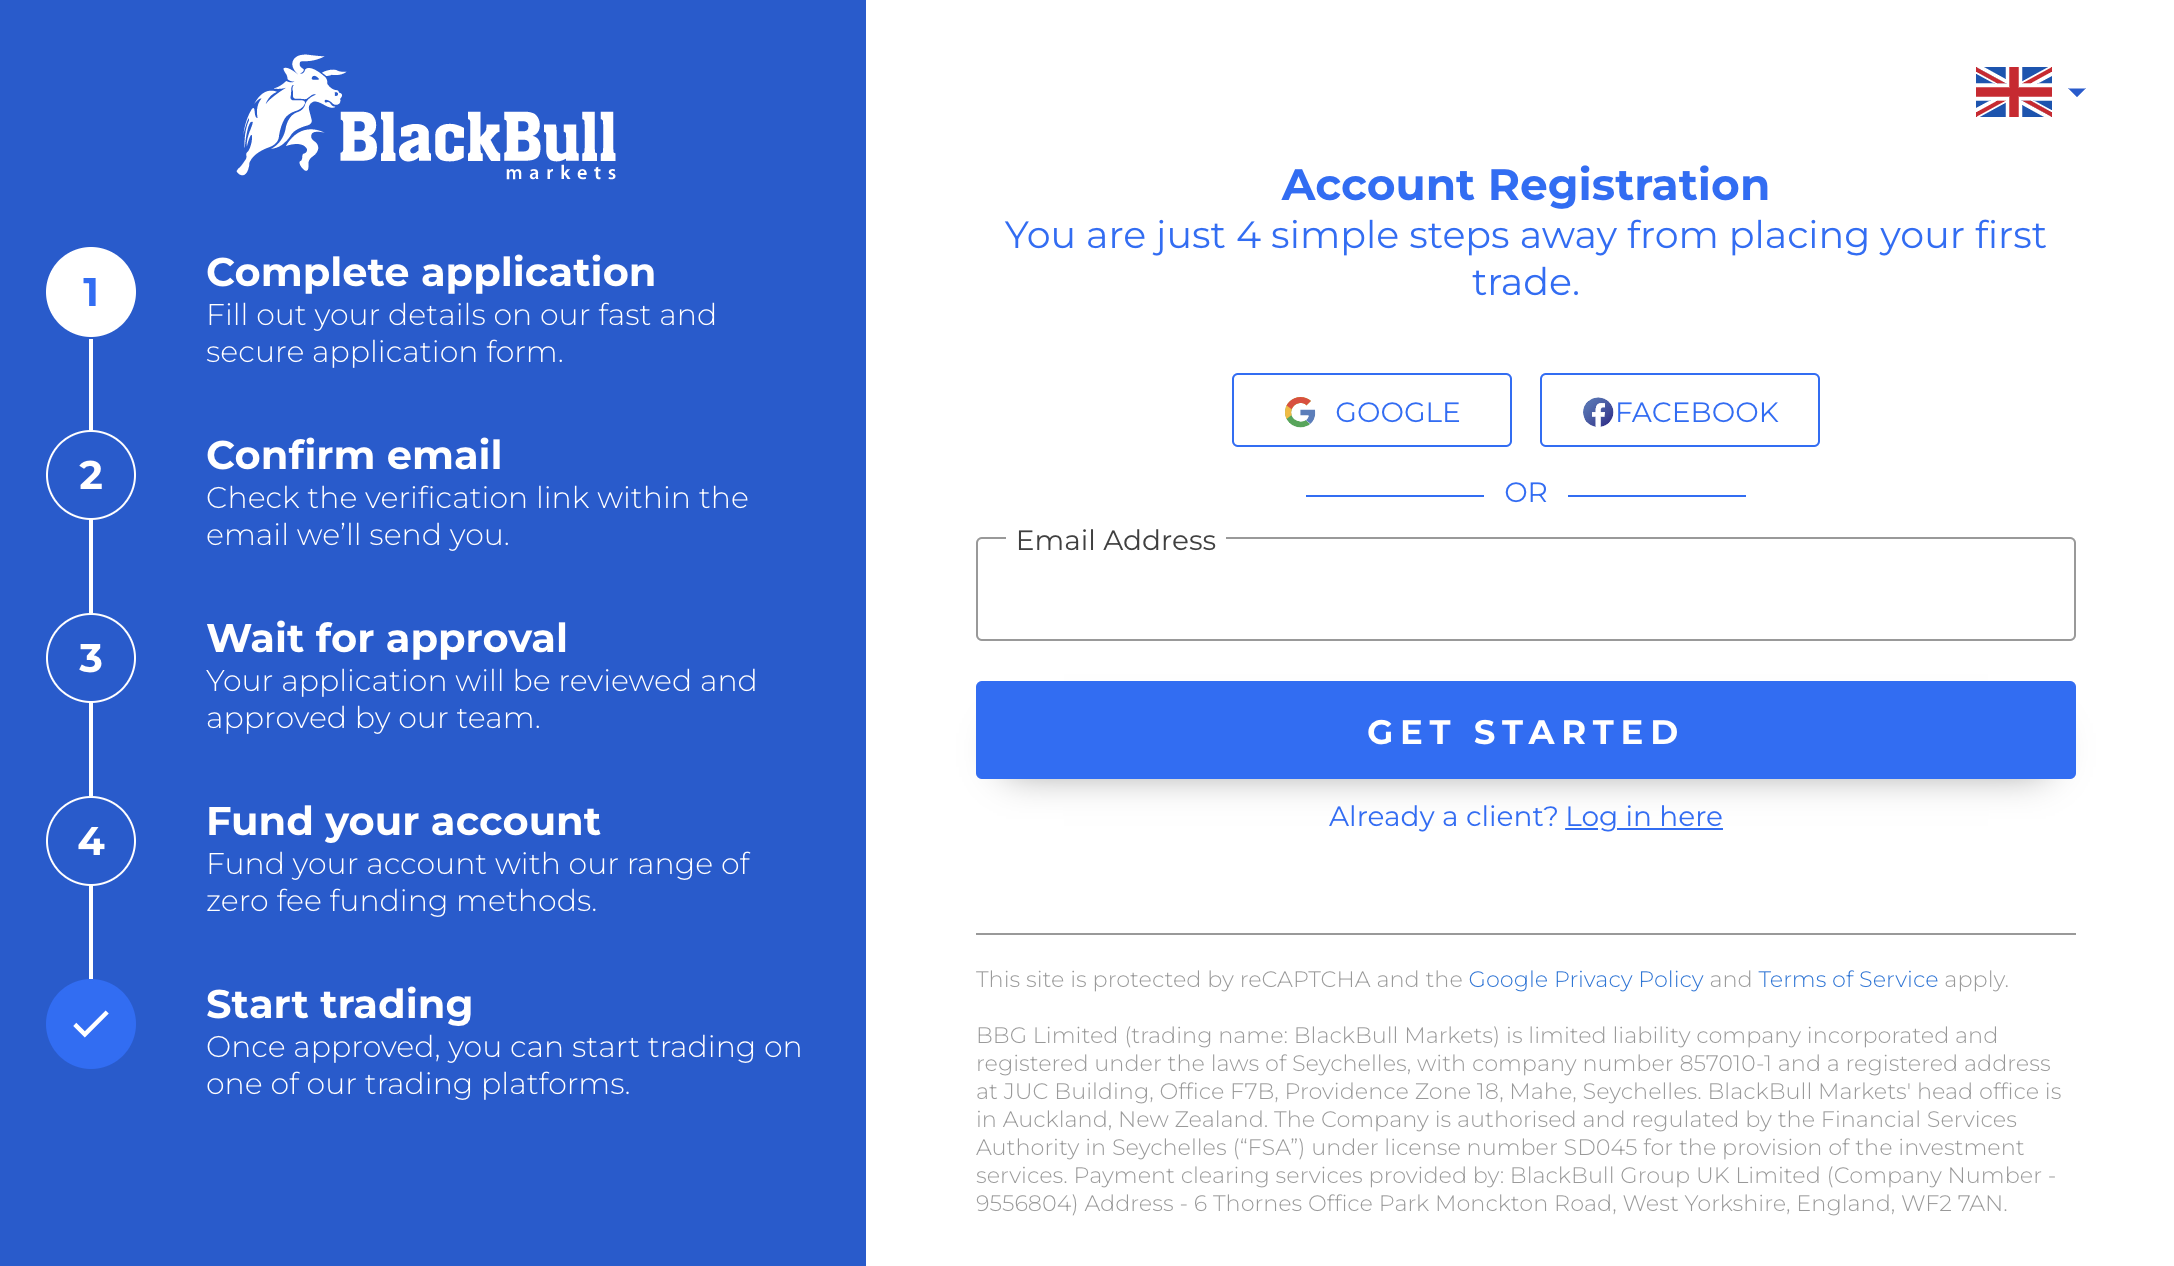 The BlackBull Markets account registration form